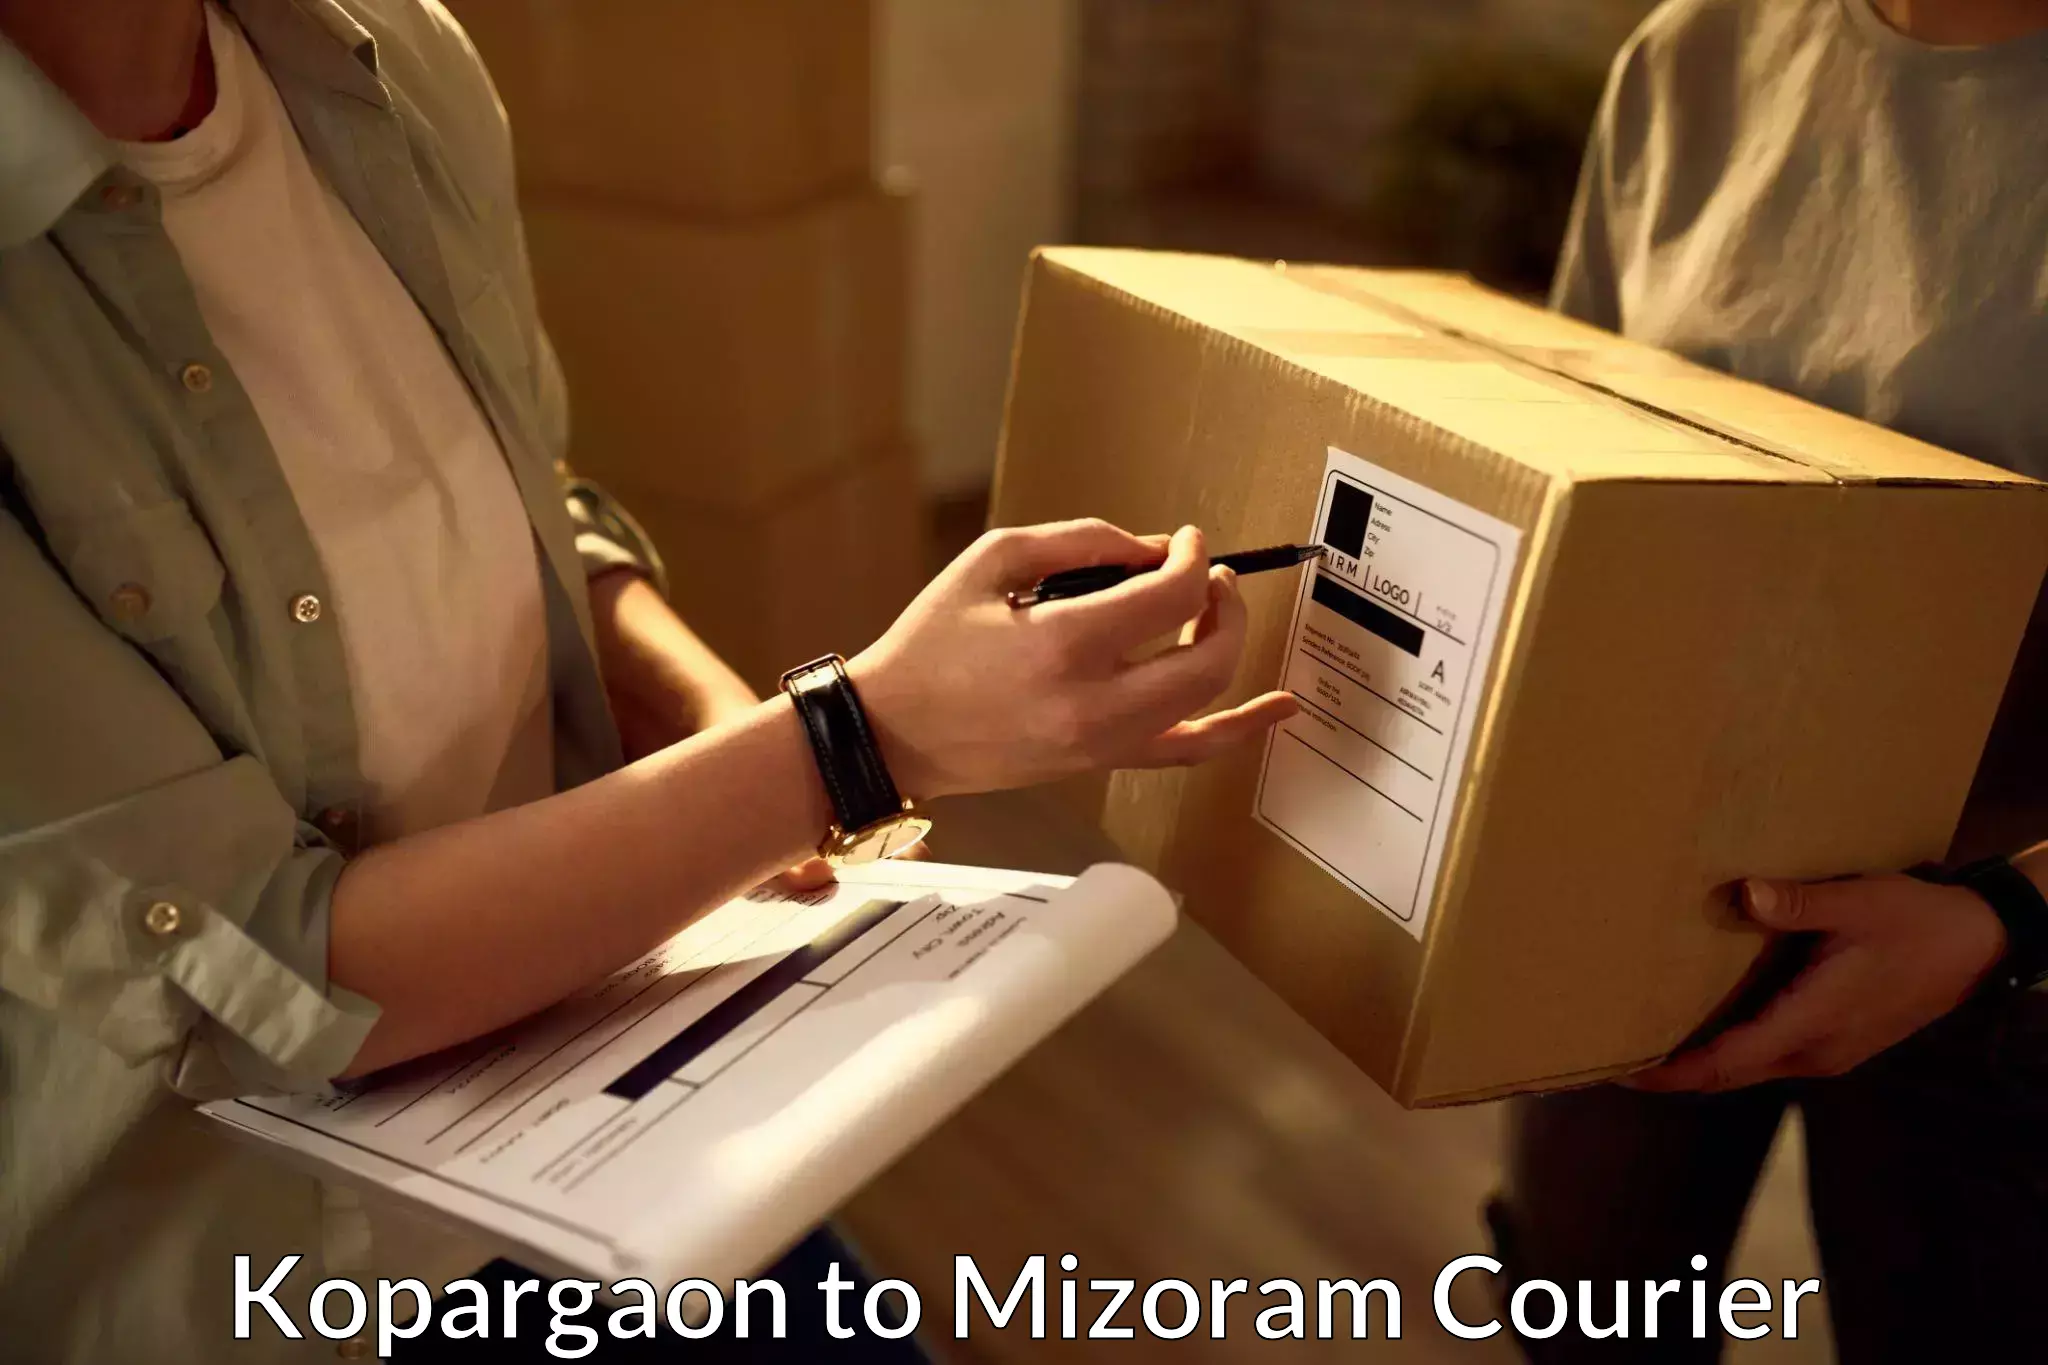 Efficient order fulfillment Kopargaon to Mizoram